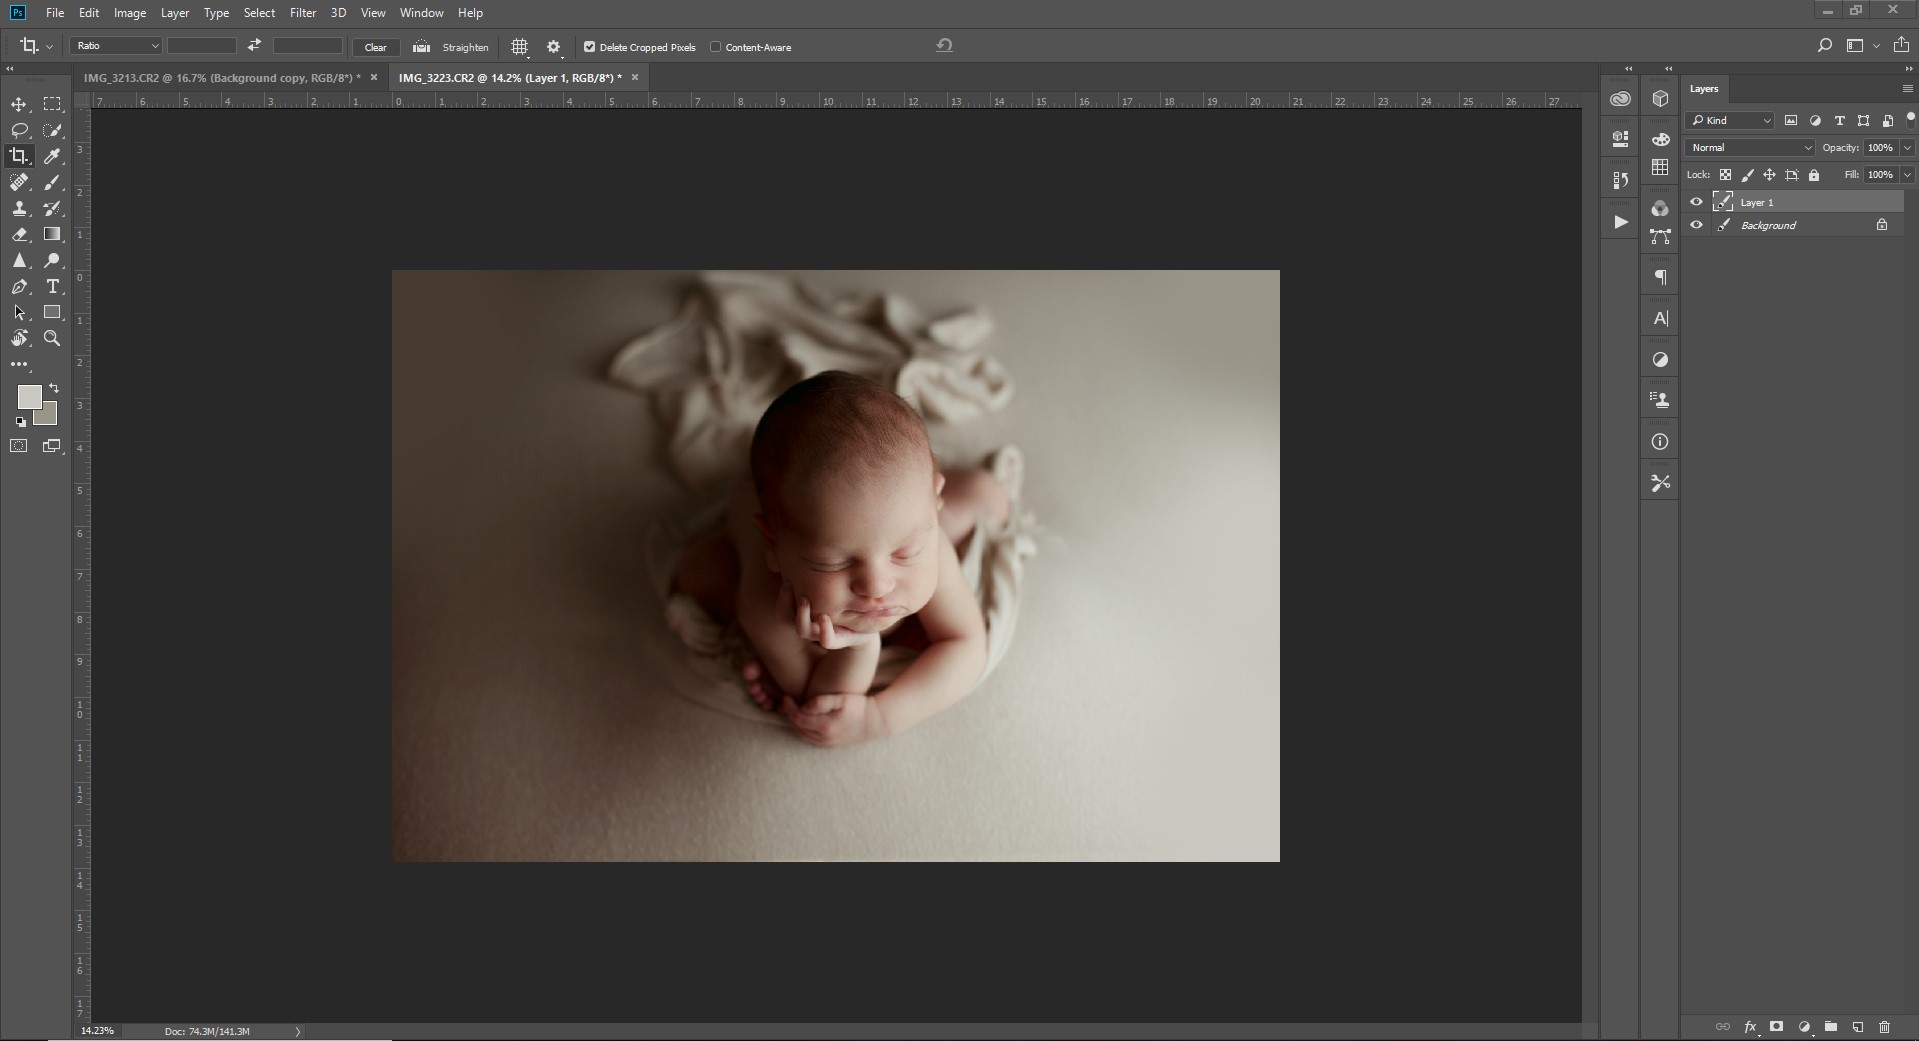 newborn photography austin tx